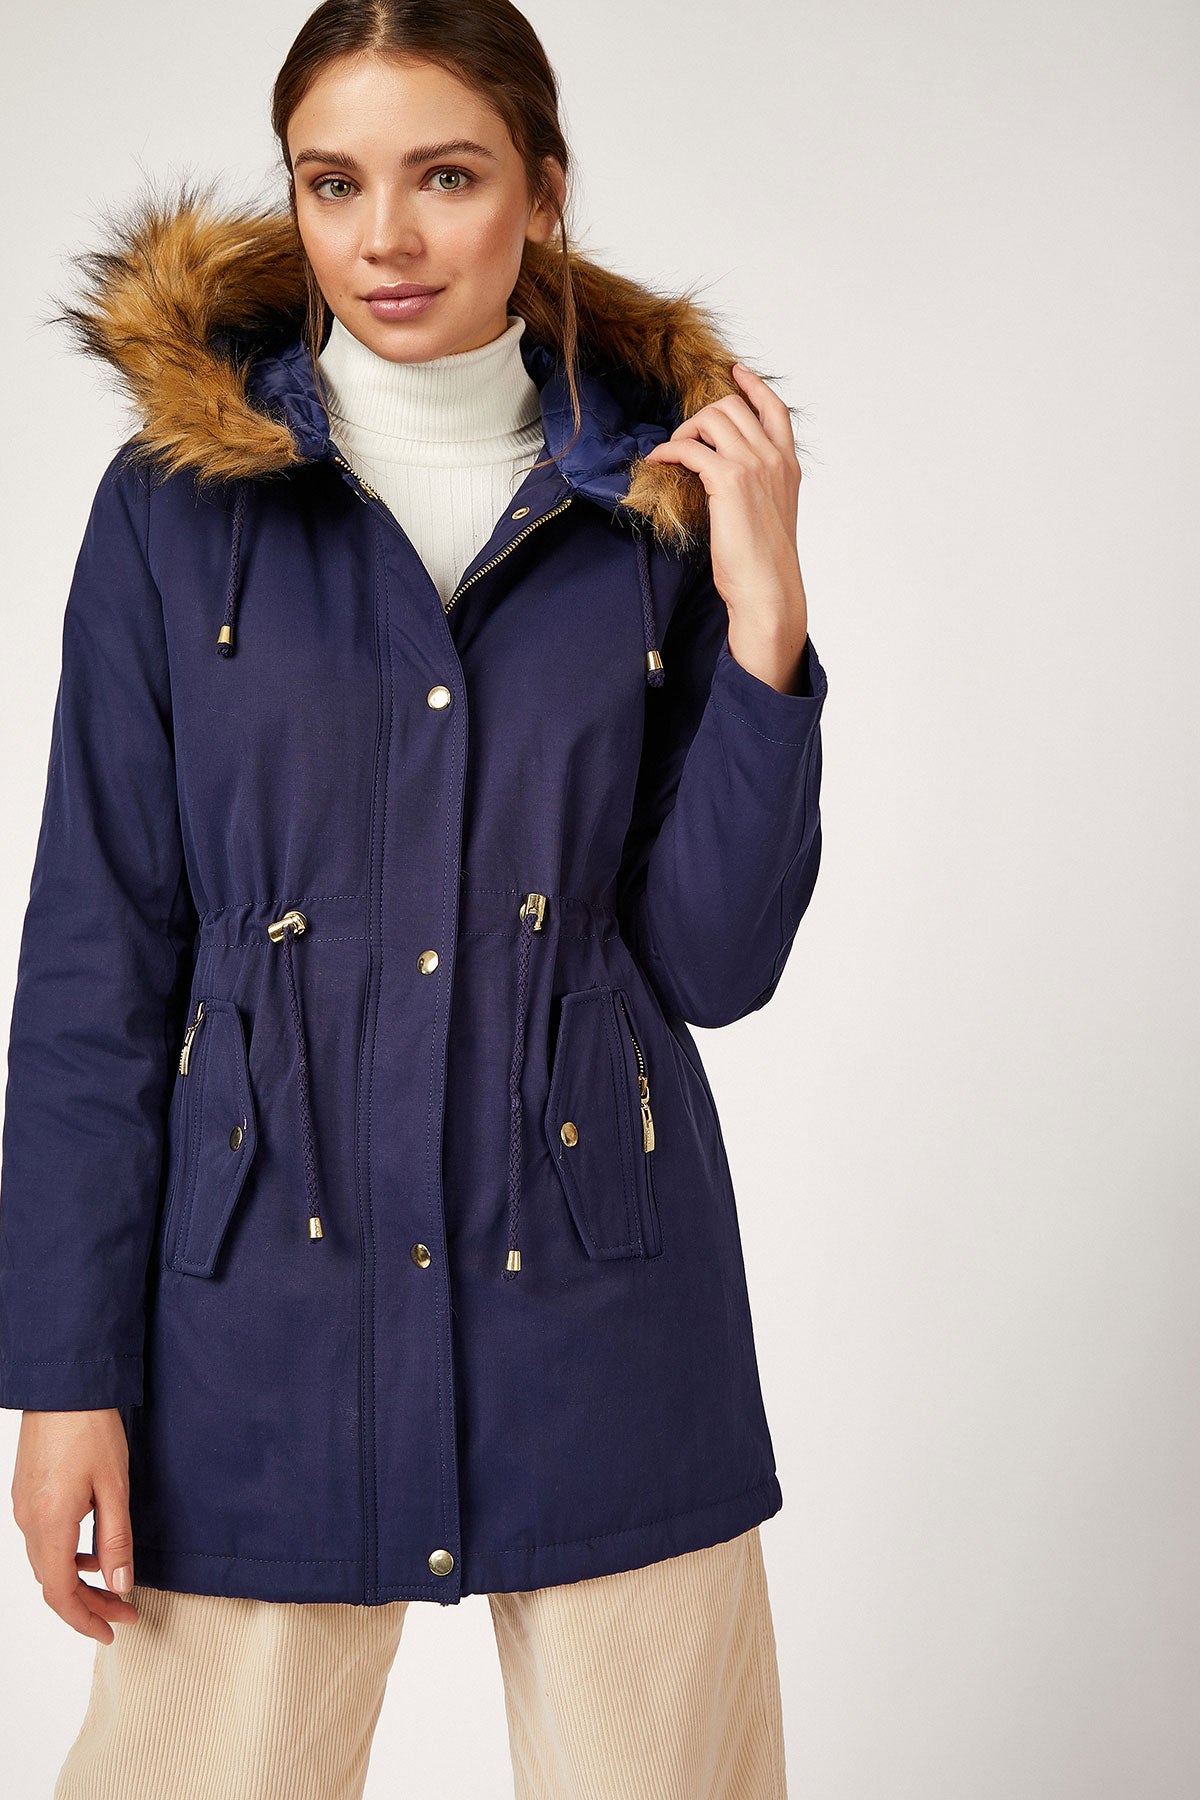 Image of Women's Fur Hooded Navy Blue Coat